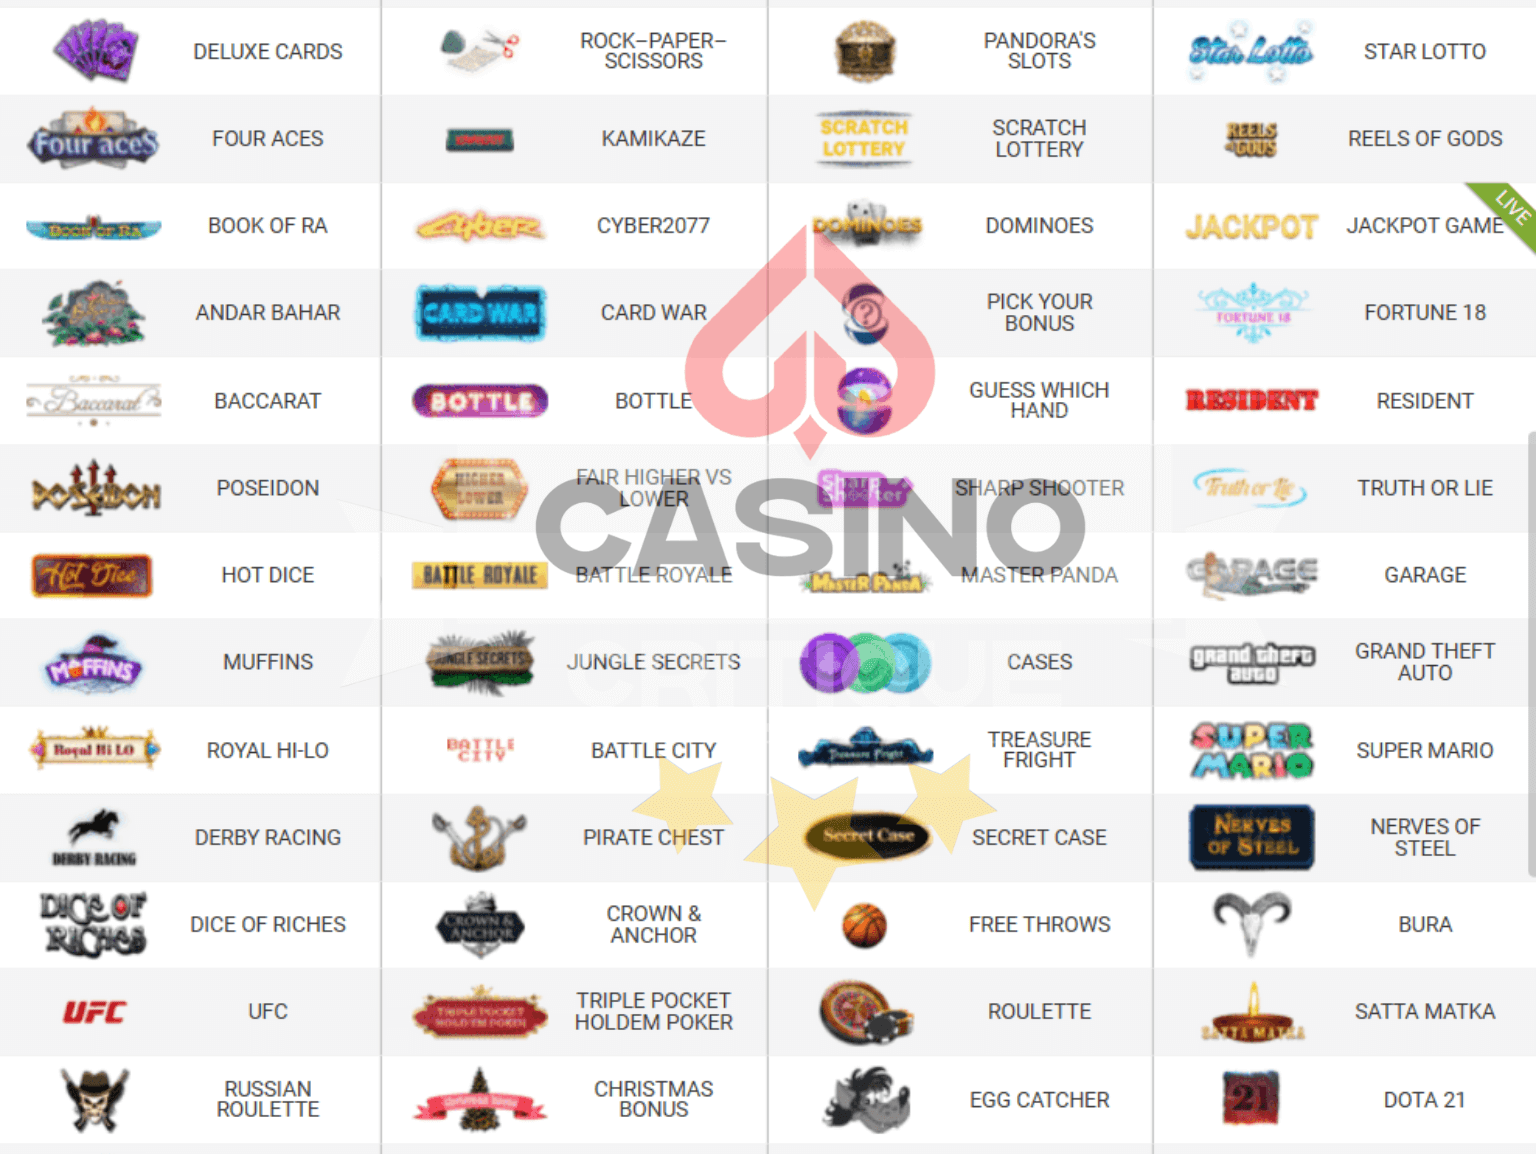 1xBit casino games providers image 2